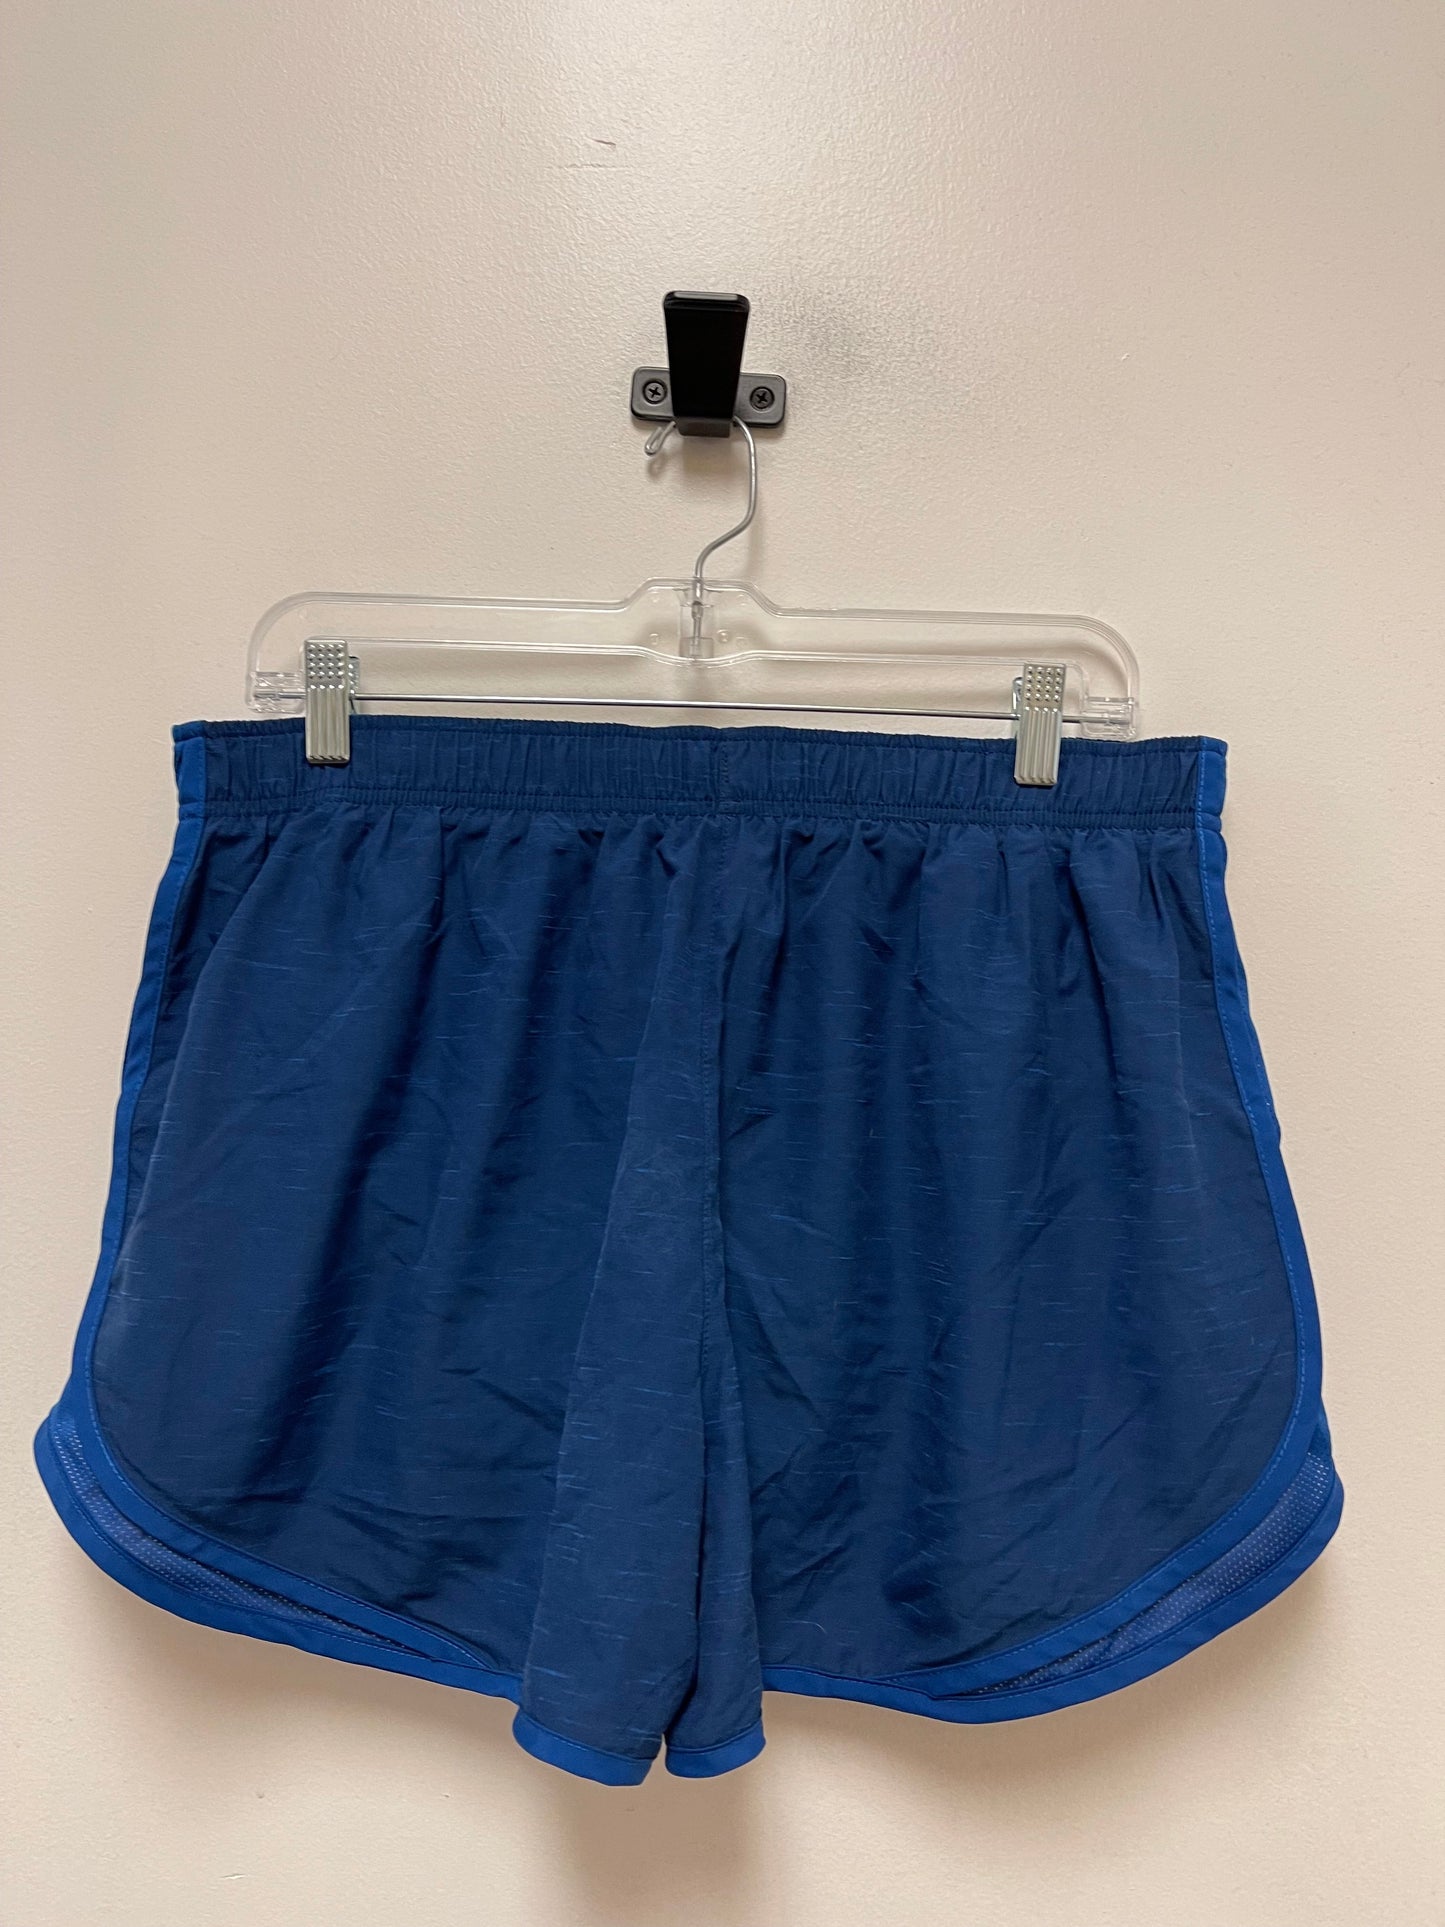 Blue Athletic Shorts Nike Apparel, Size Xl